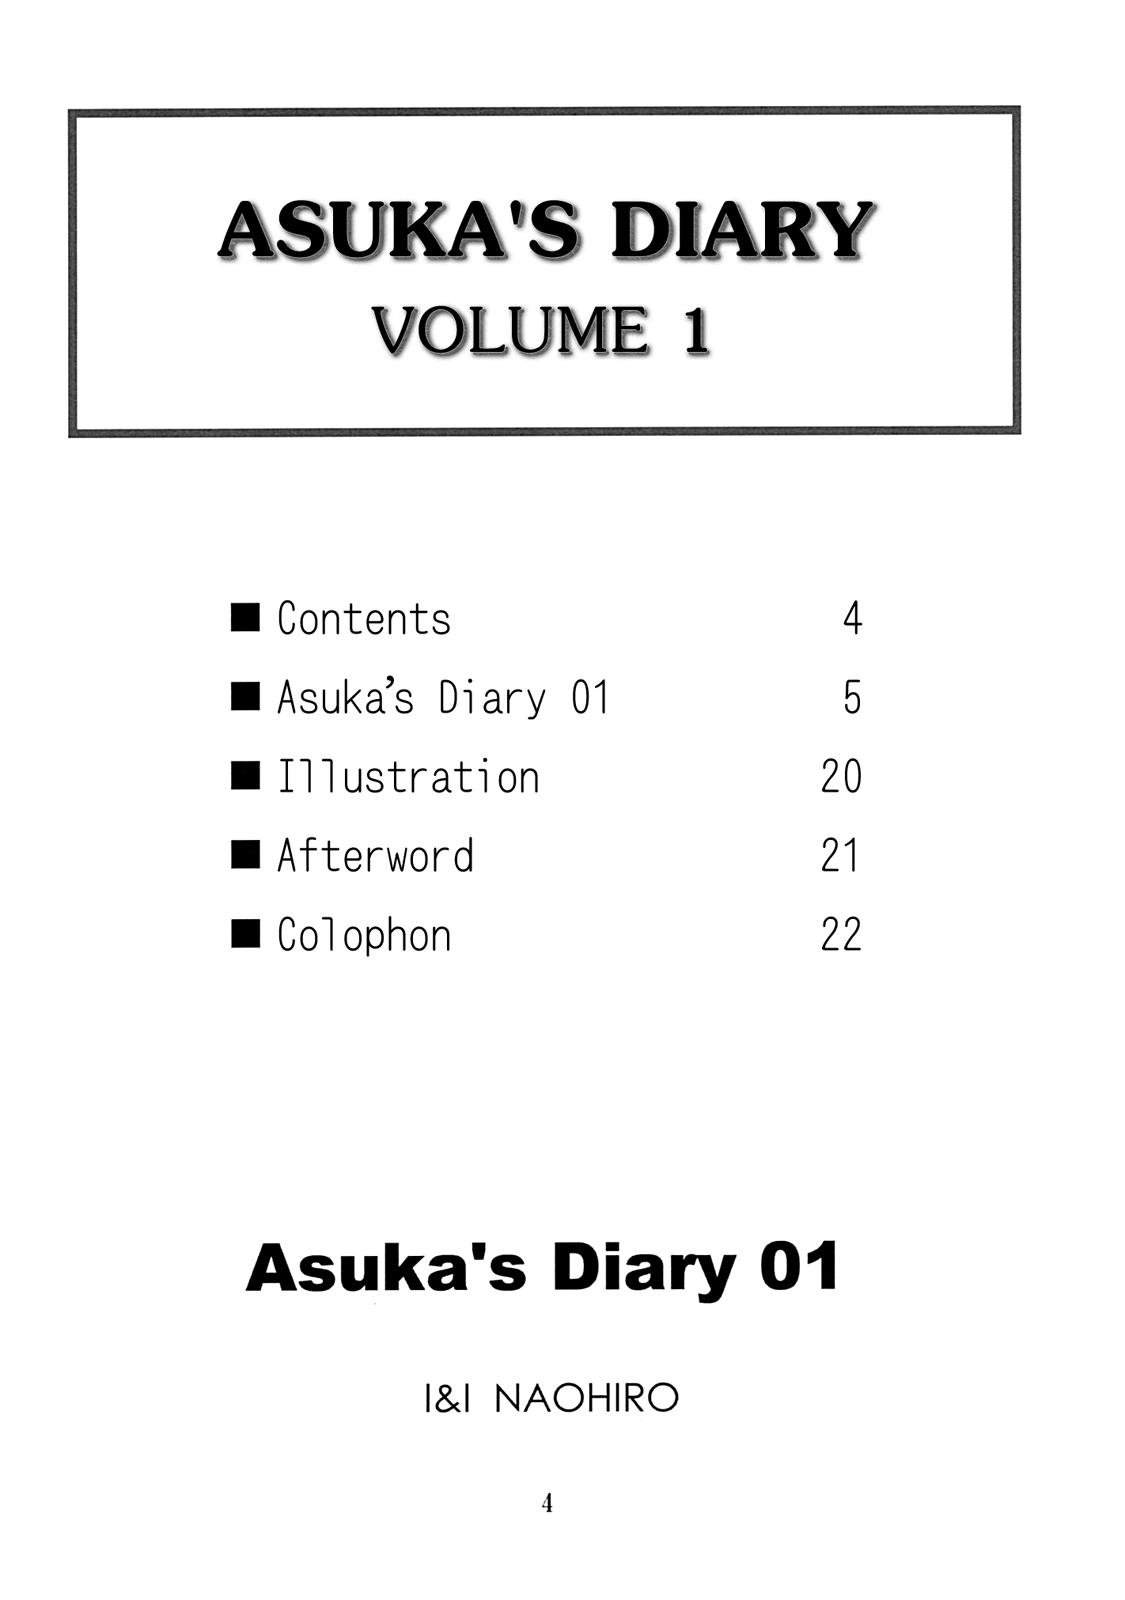 Full Asuka's Diary 01 - Neon genesis evangelion Stream - Page 4